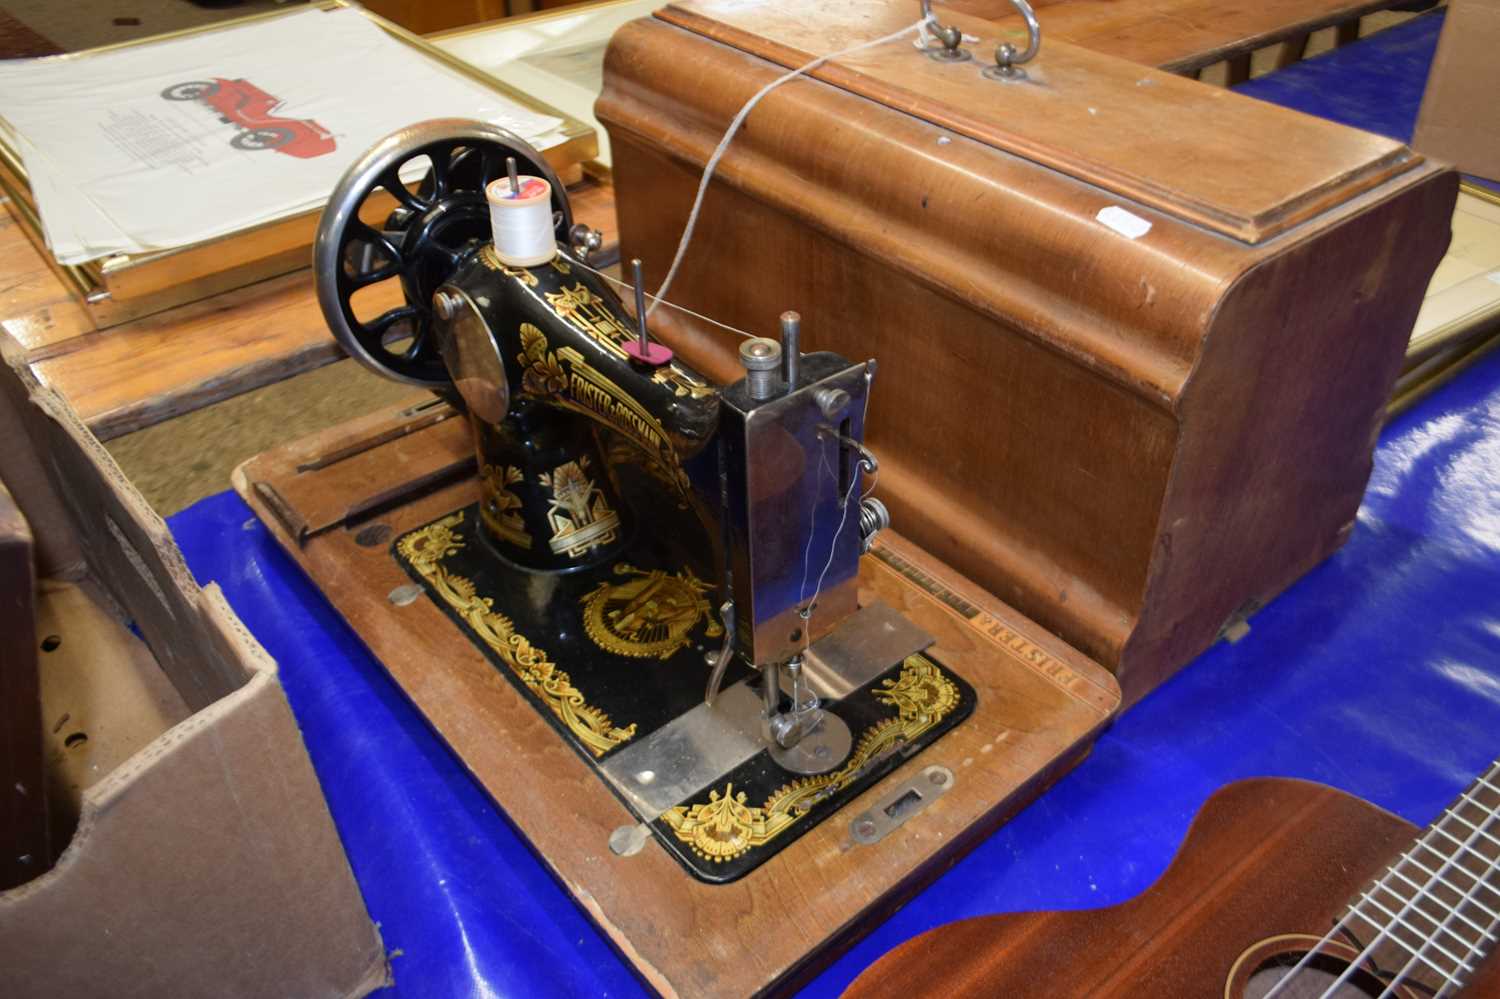 Vintage cased Frister & Rossmann sewing machine